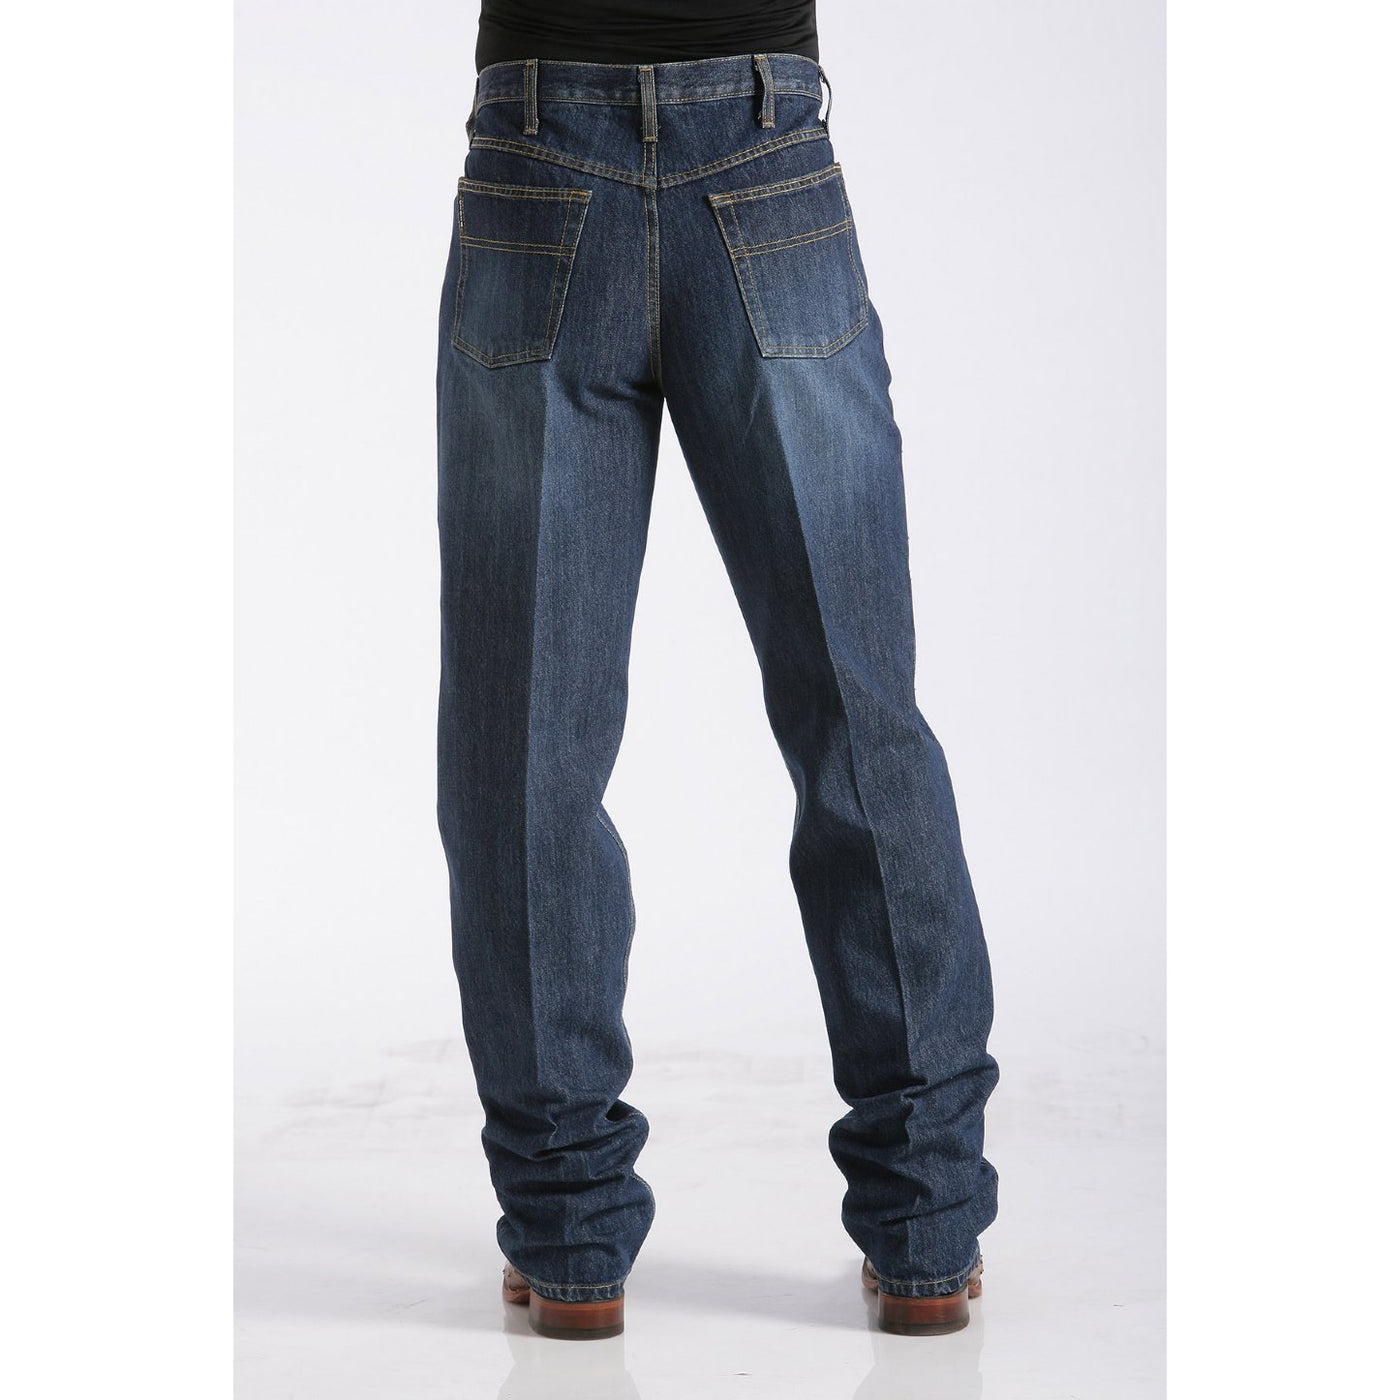 Cinch Men's Loose Fit Black Label Jeans - Dark Stonewash - West 20 Saddle Co.